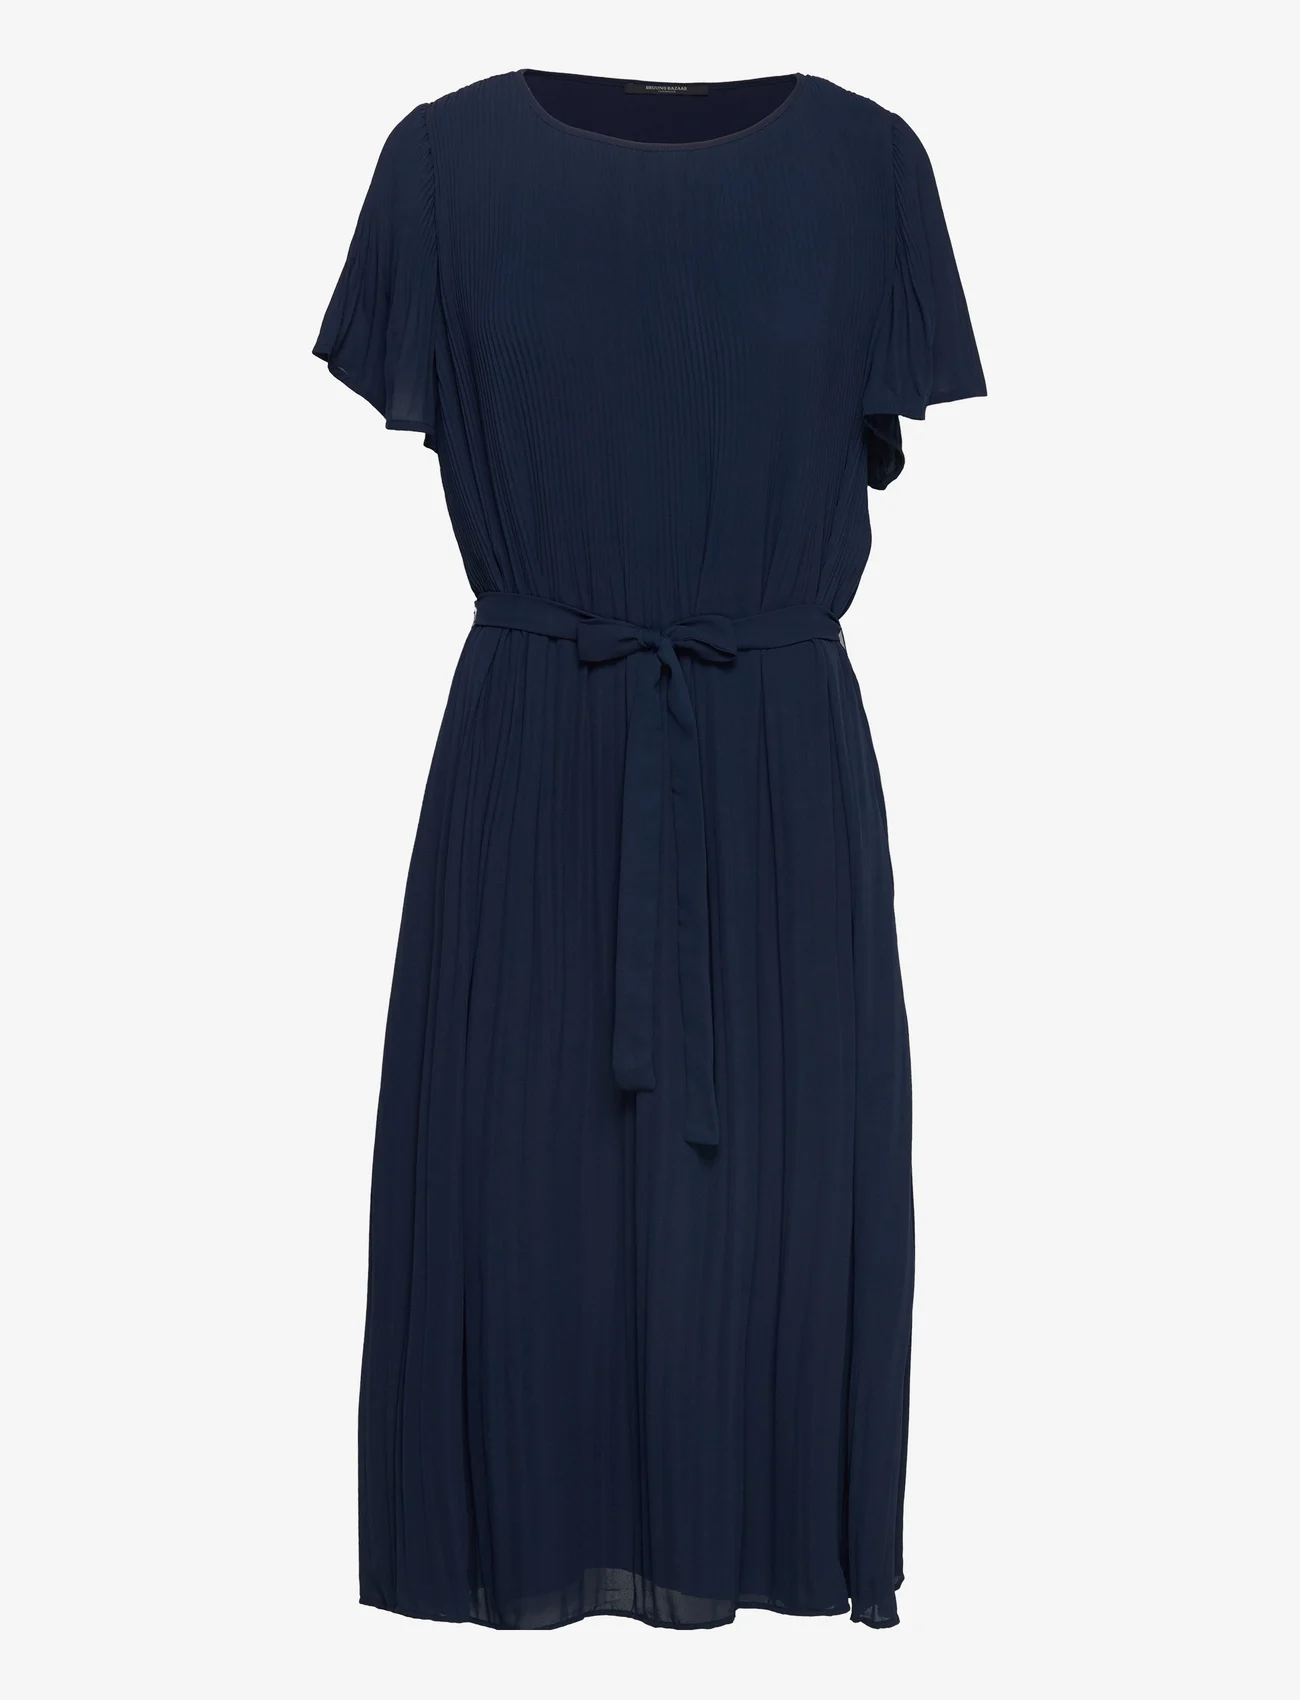 Bruuns Bazaar - Pearl Zilla dress - midikleider - navy - 0